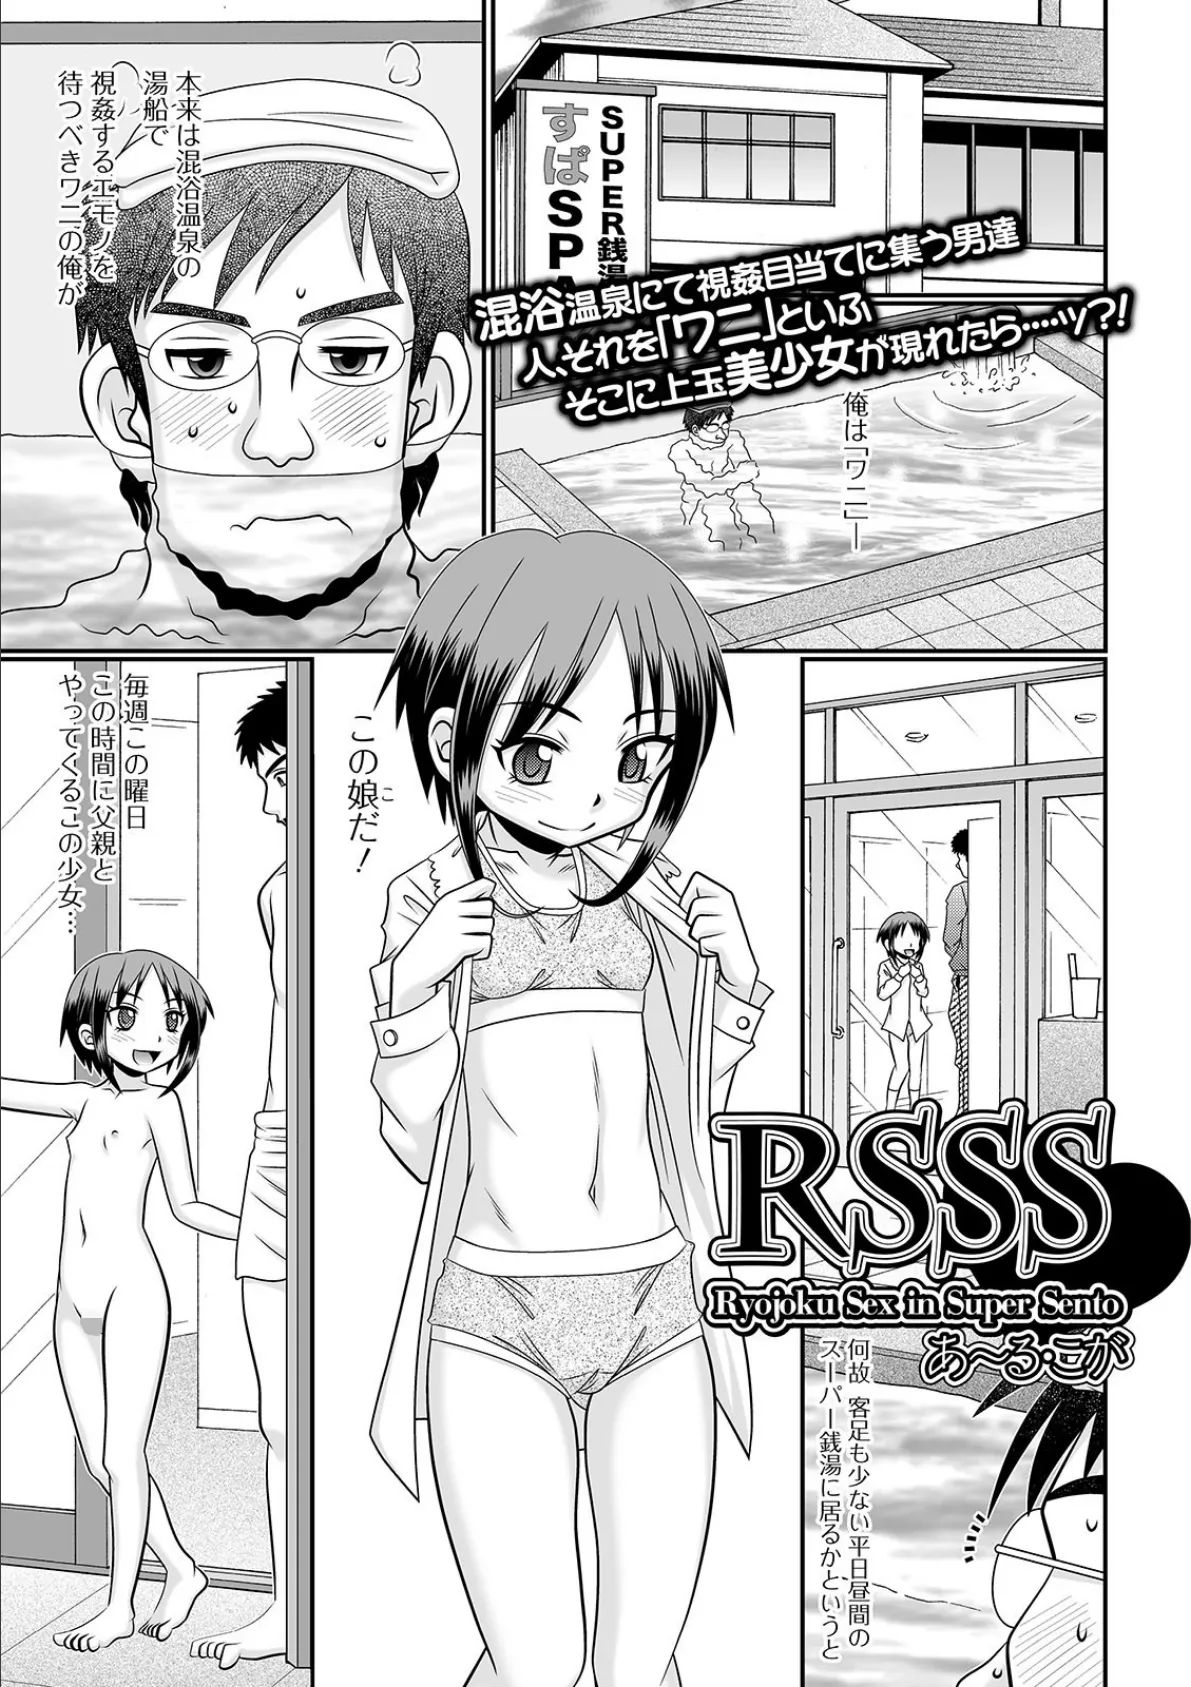 RSSS Ryojoku Sex in Super Sento 1ページ